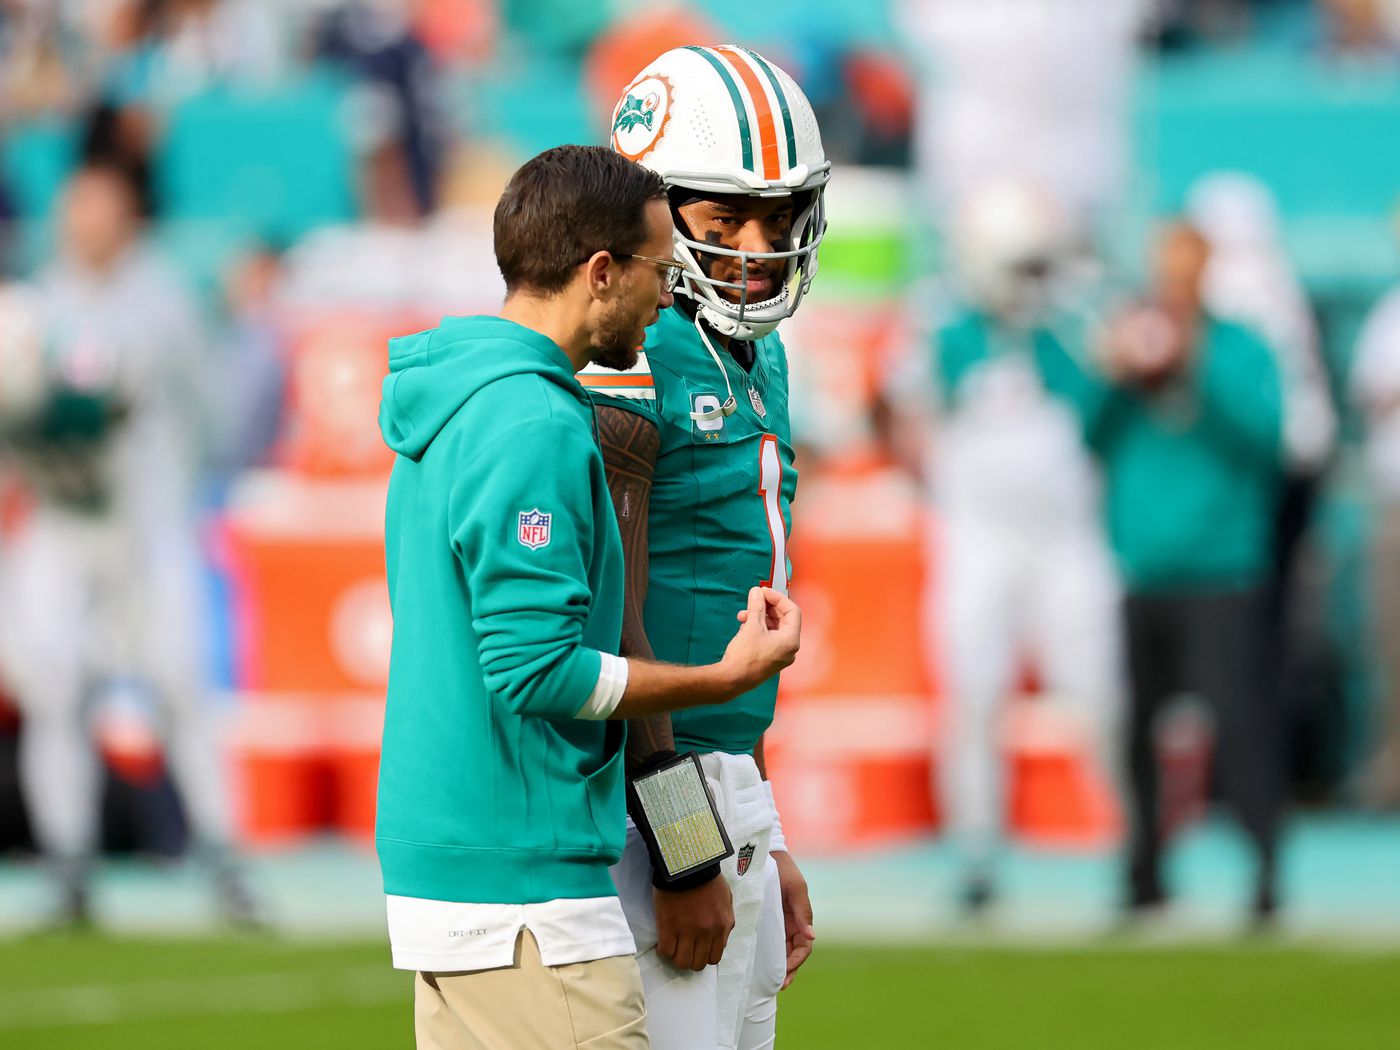 Tua Tagovailoa at a Crossroads: Why the Miami Dolphins Should Bet Big on Their Quarterback